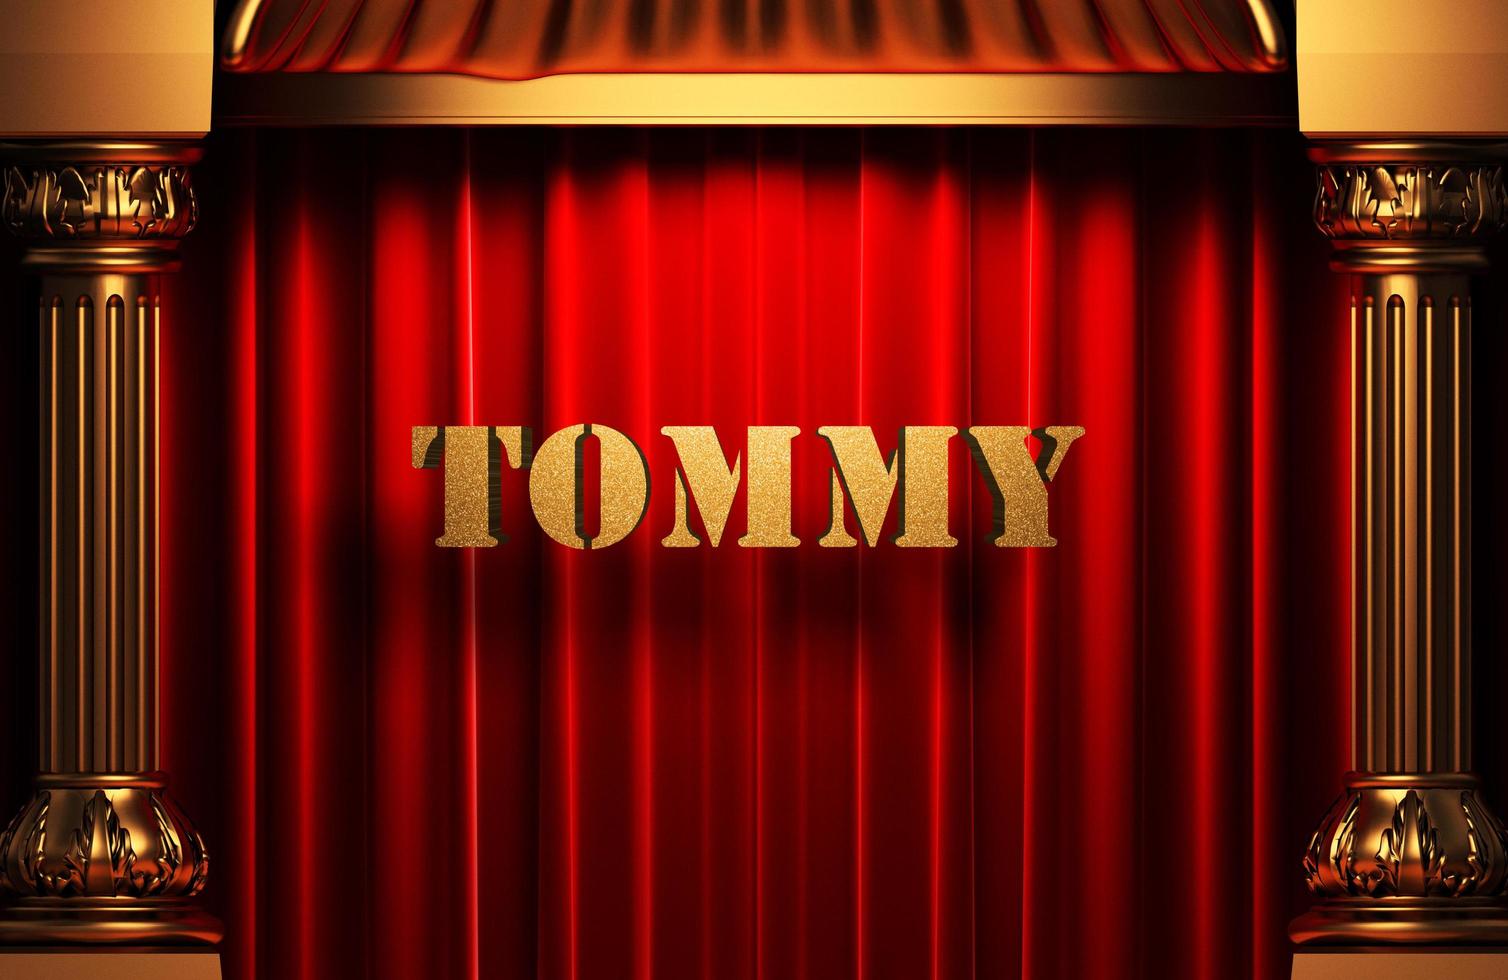 Tommy palavra dourada na cortina vermelha foto